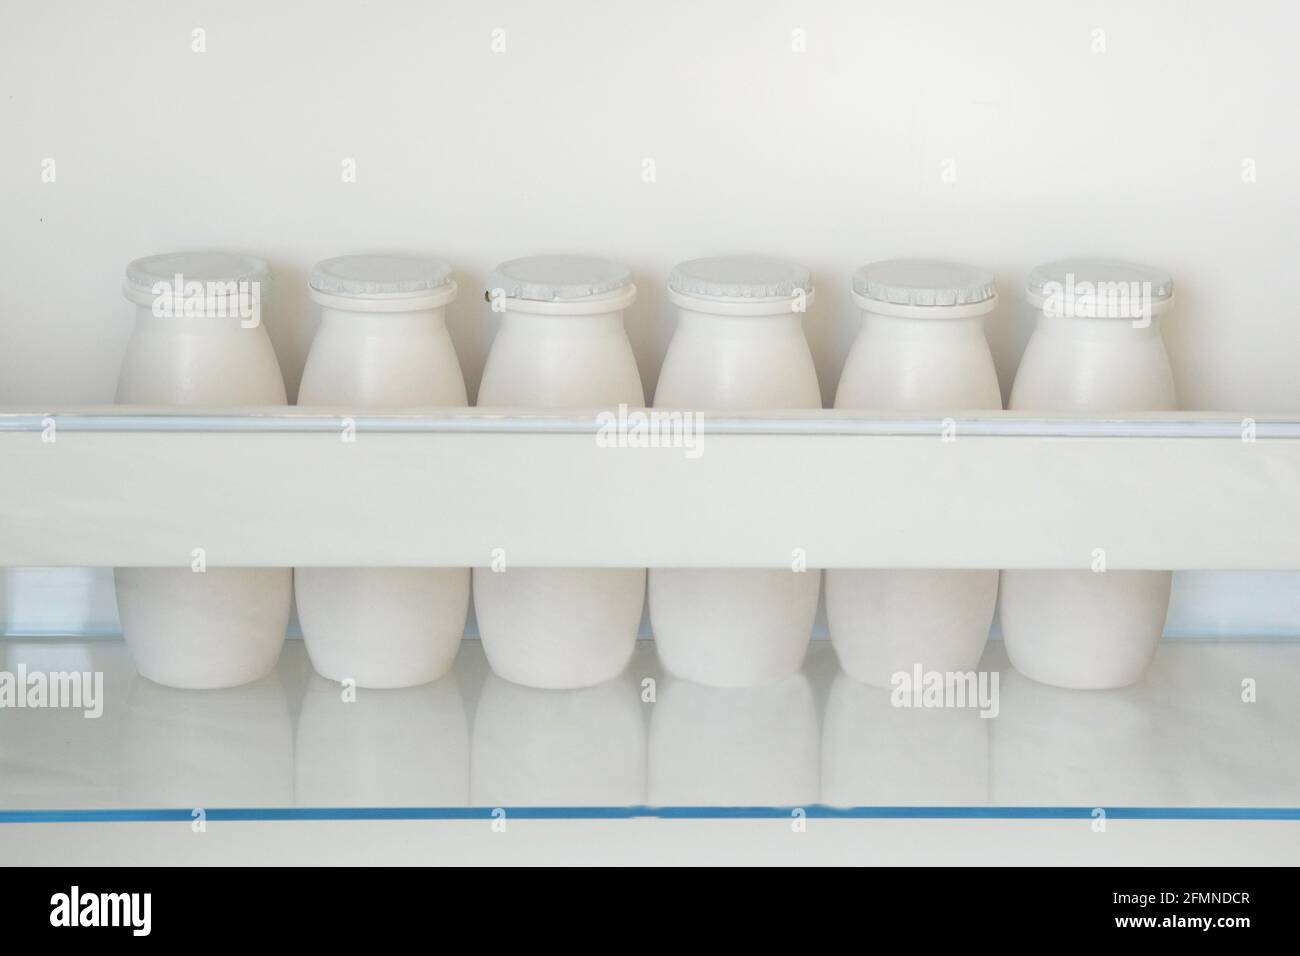 White bottles of yoghurt on shelf of open empty fridge. Weight loss diet concept. Horizontal view. Stock Photo